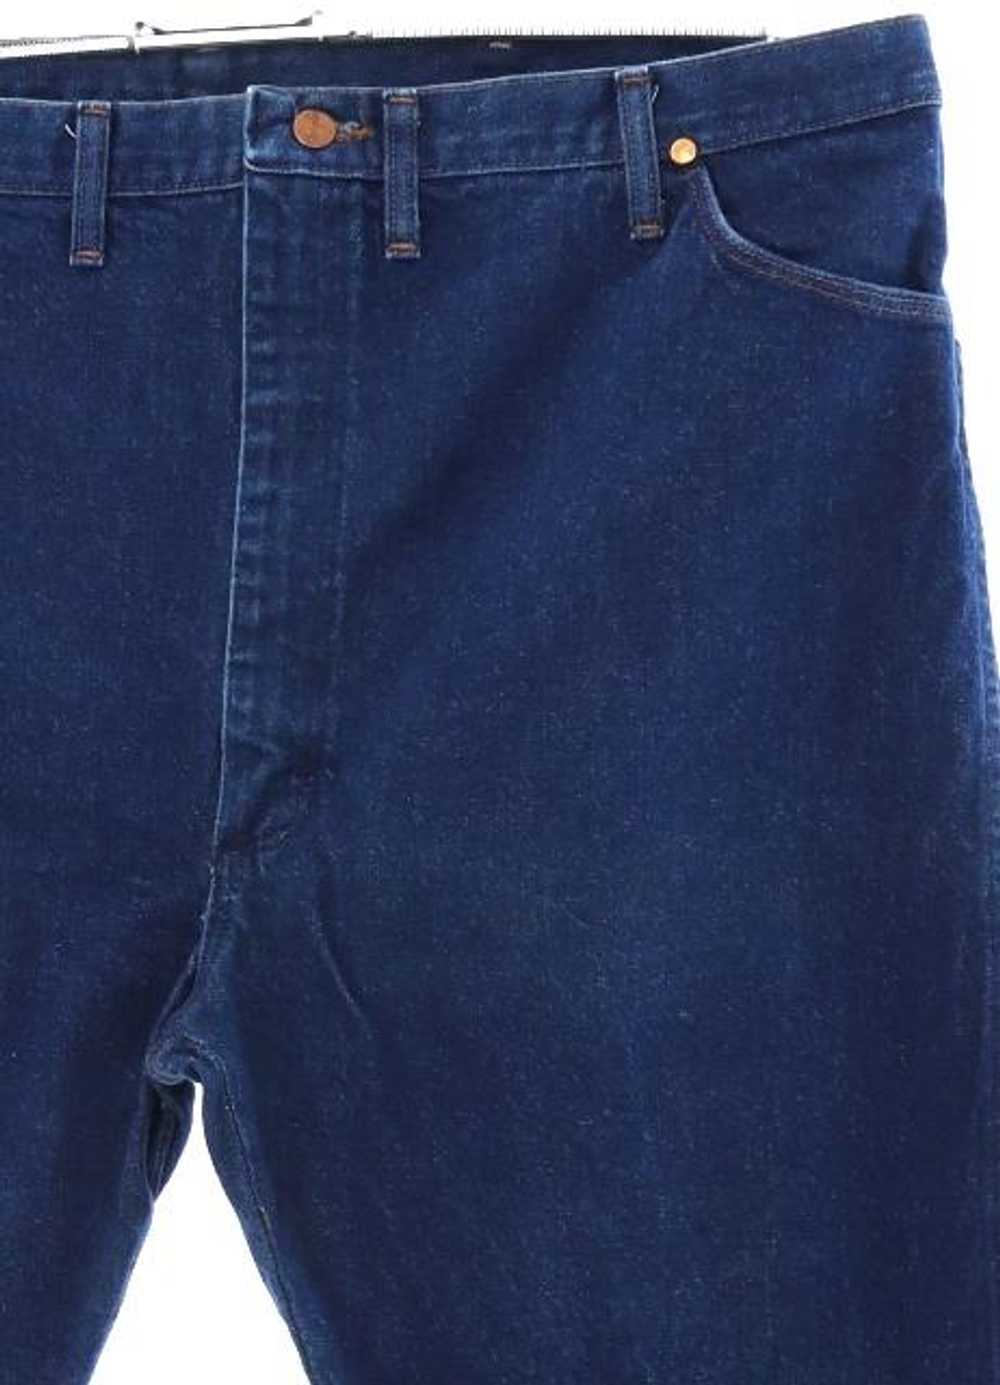 1990's 1995) Mens Wrangler Denim Jeans Pants - image 2